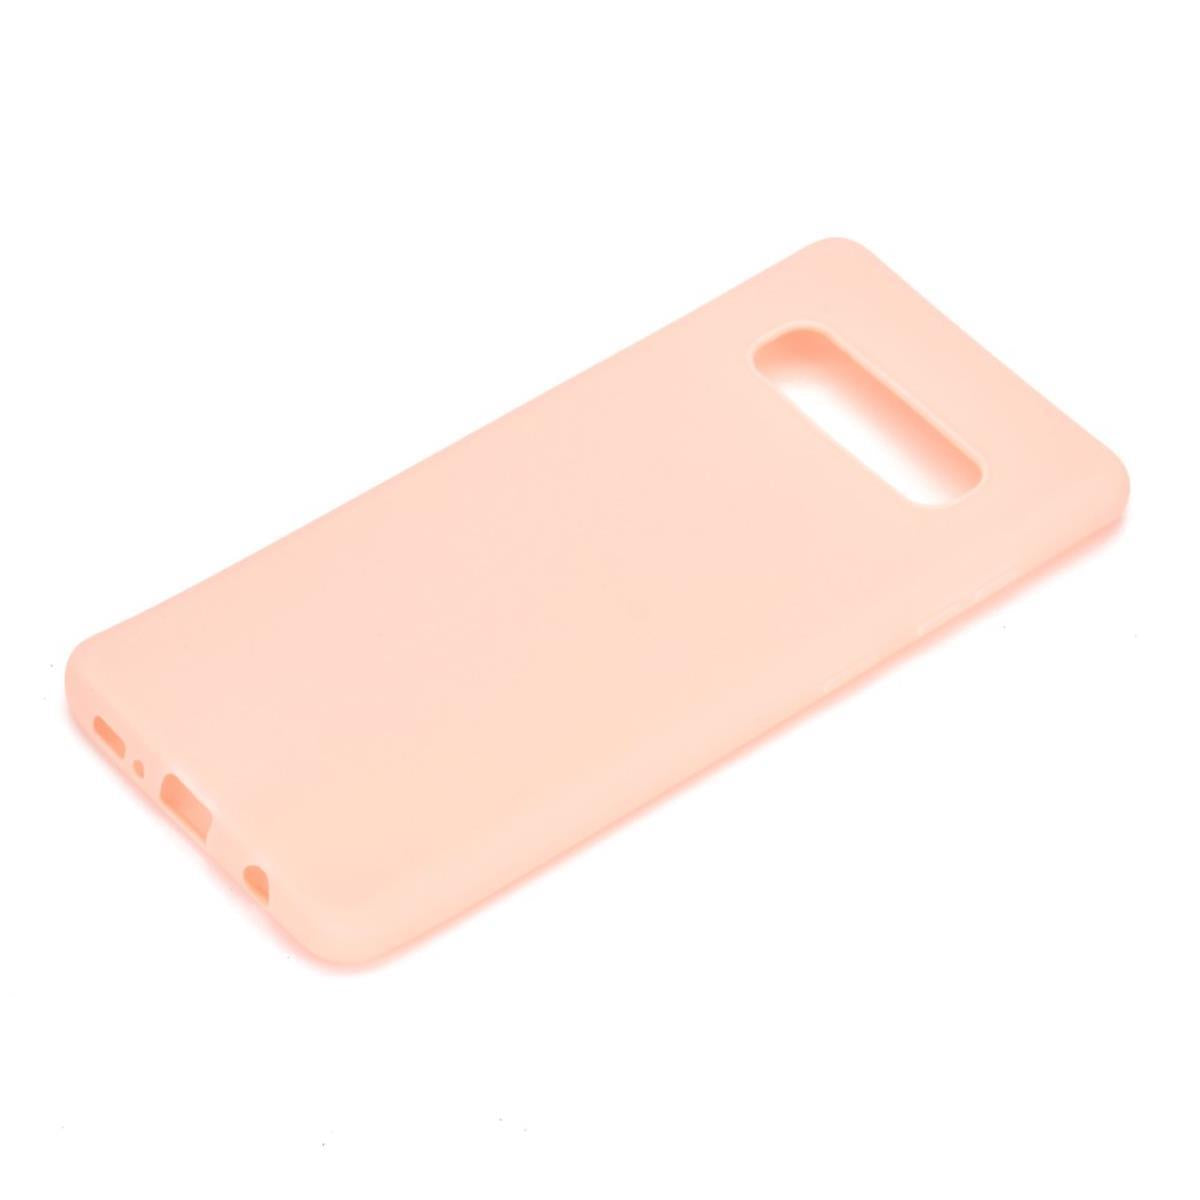 Hülle für Samsung Galaxy S10+ (Plus) Handyhülle Silikon Case Schutzhülle Rosa